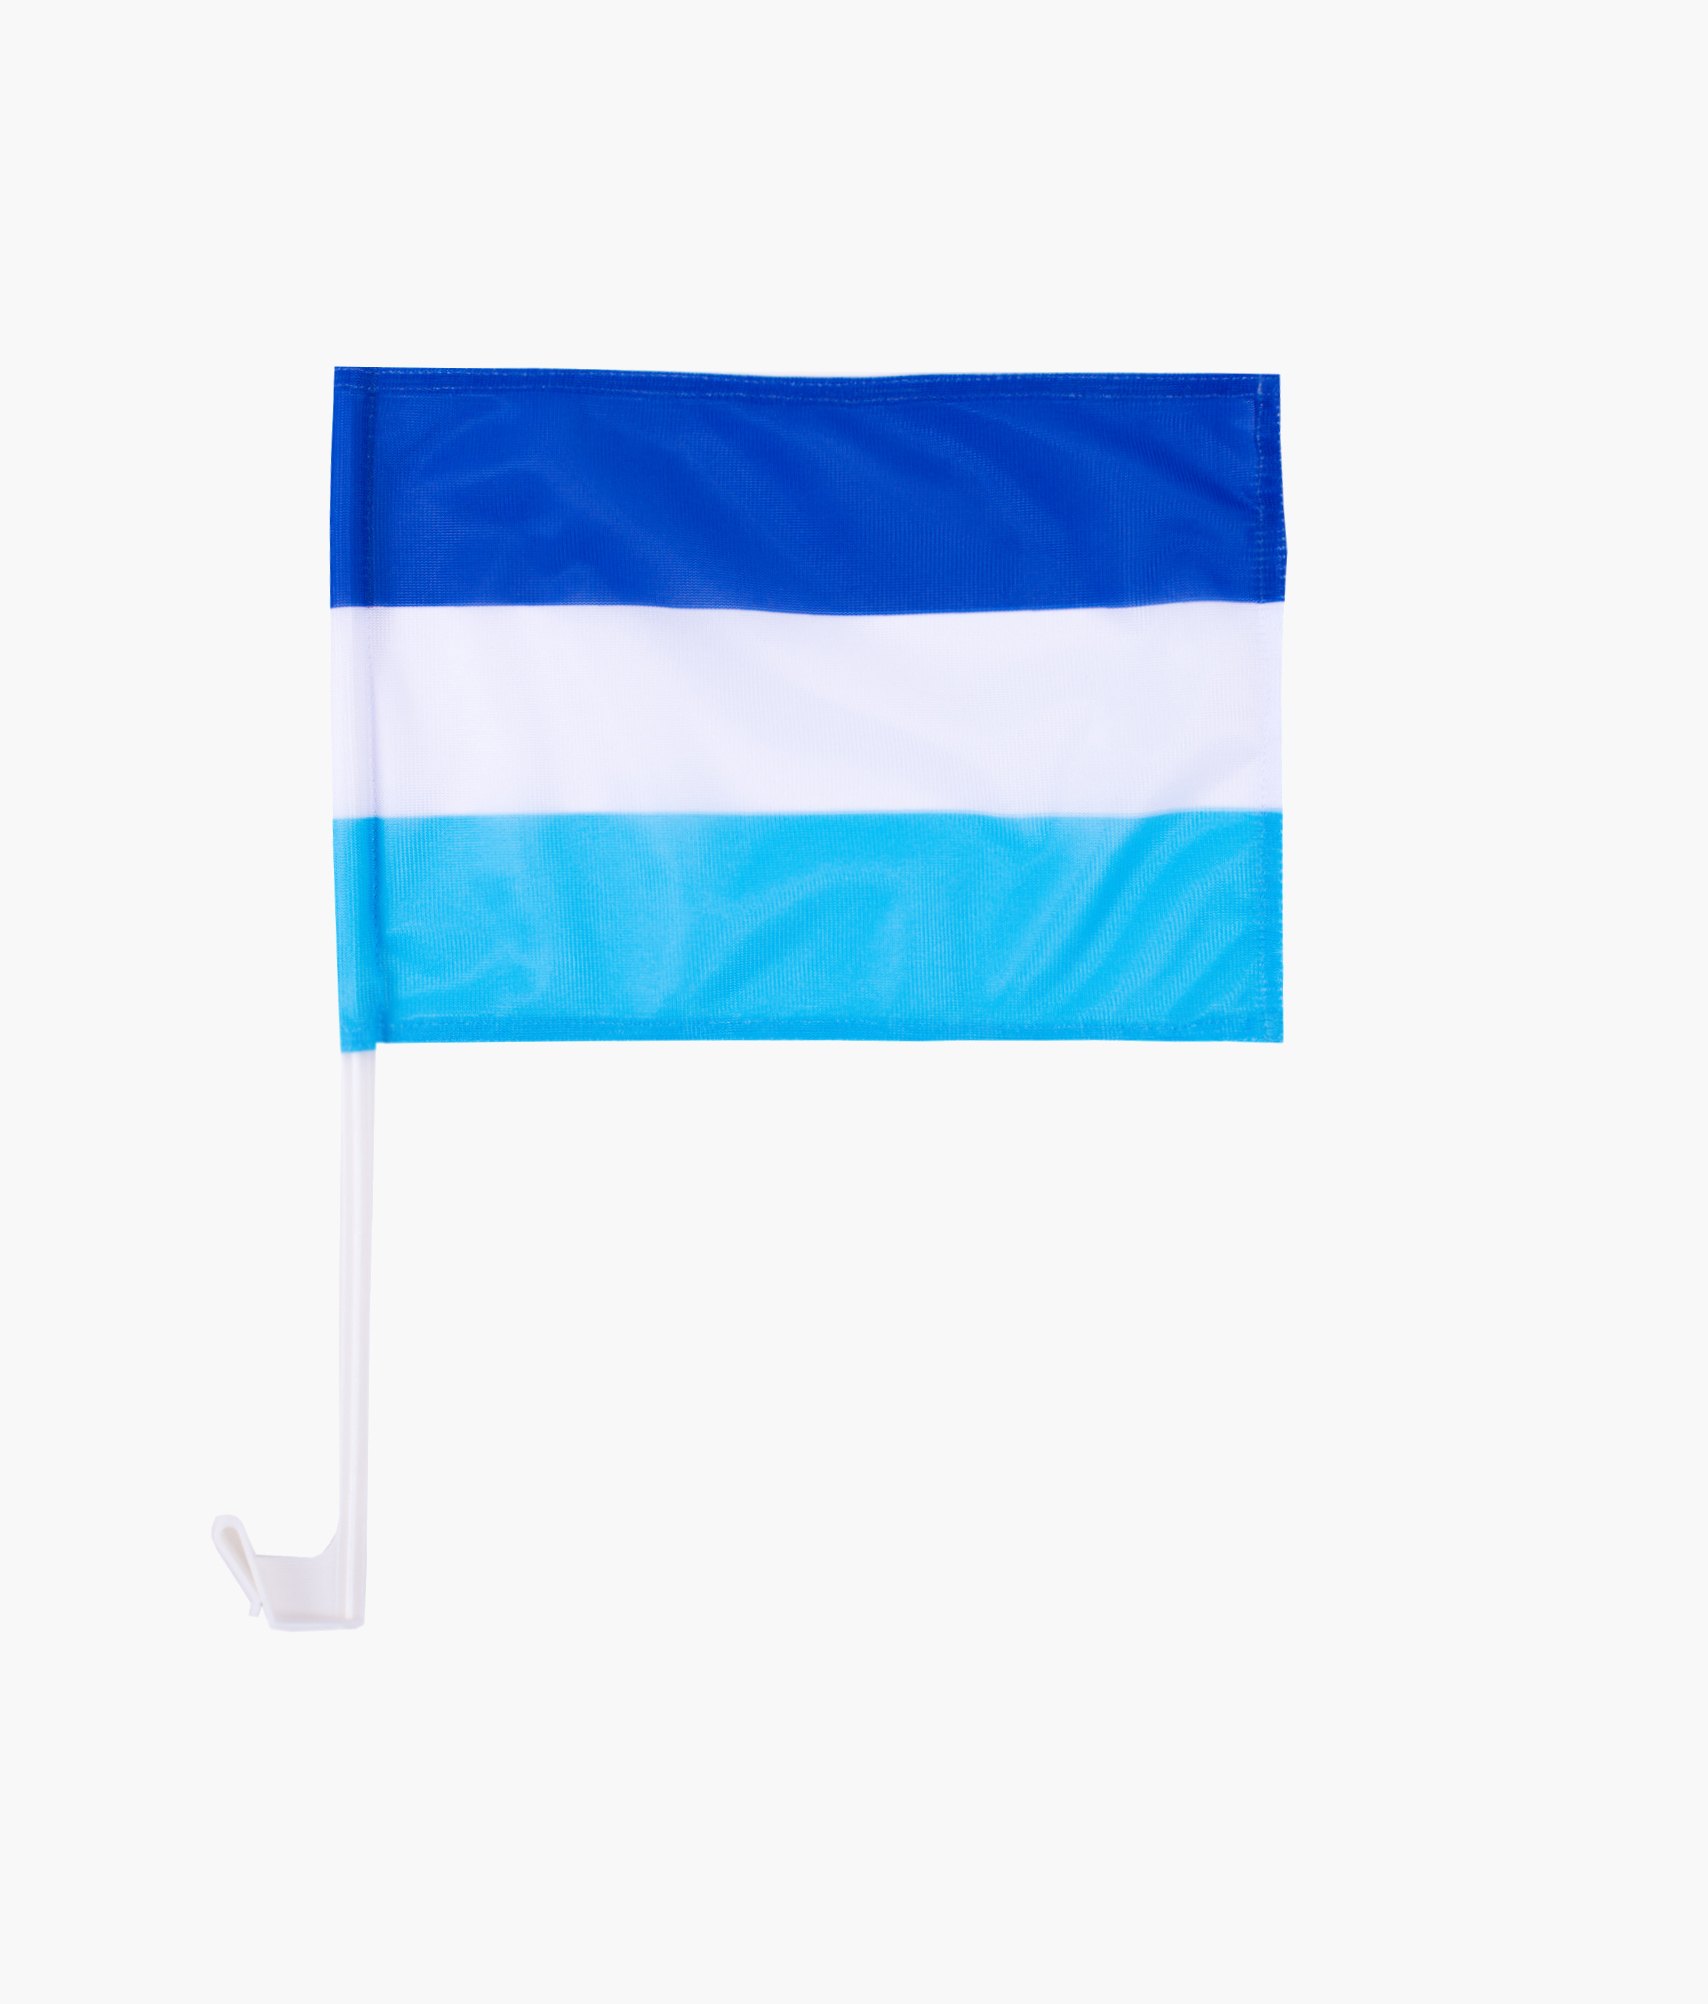 На борту холера бело синий флаг. Бело синий флаг. Сине бело голубой флаг Зенит. Бело сине белый флаг. Синий флажок.